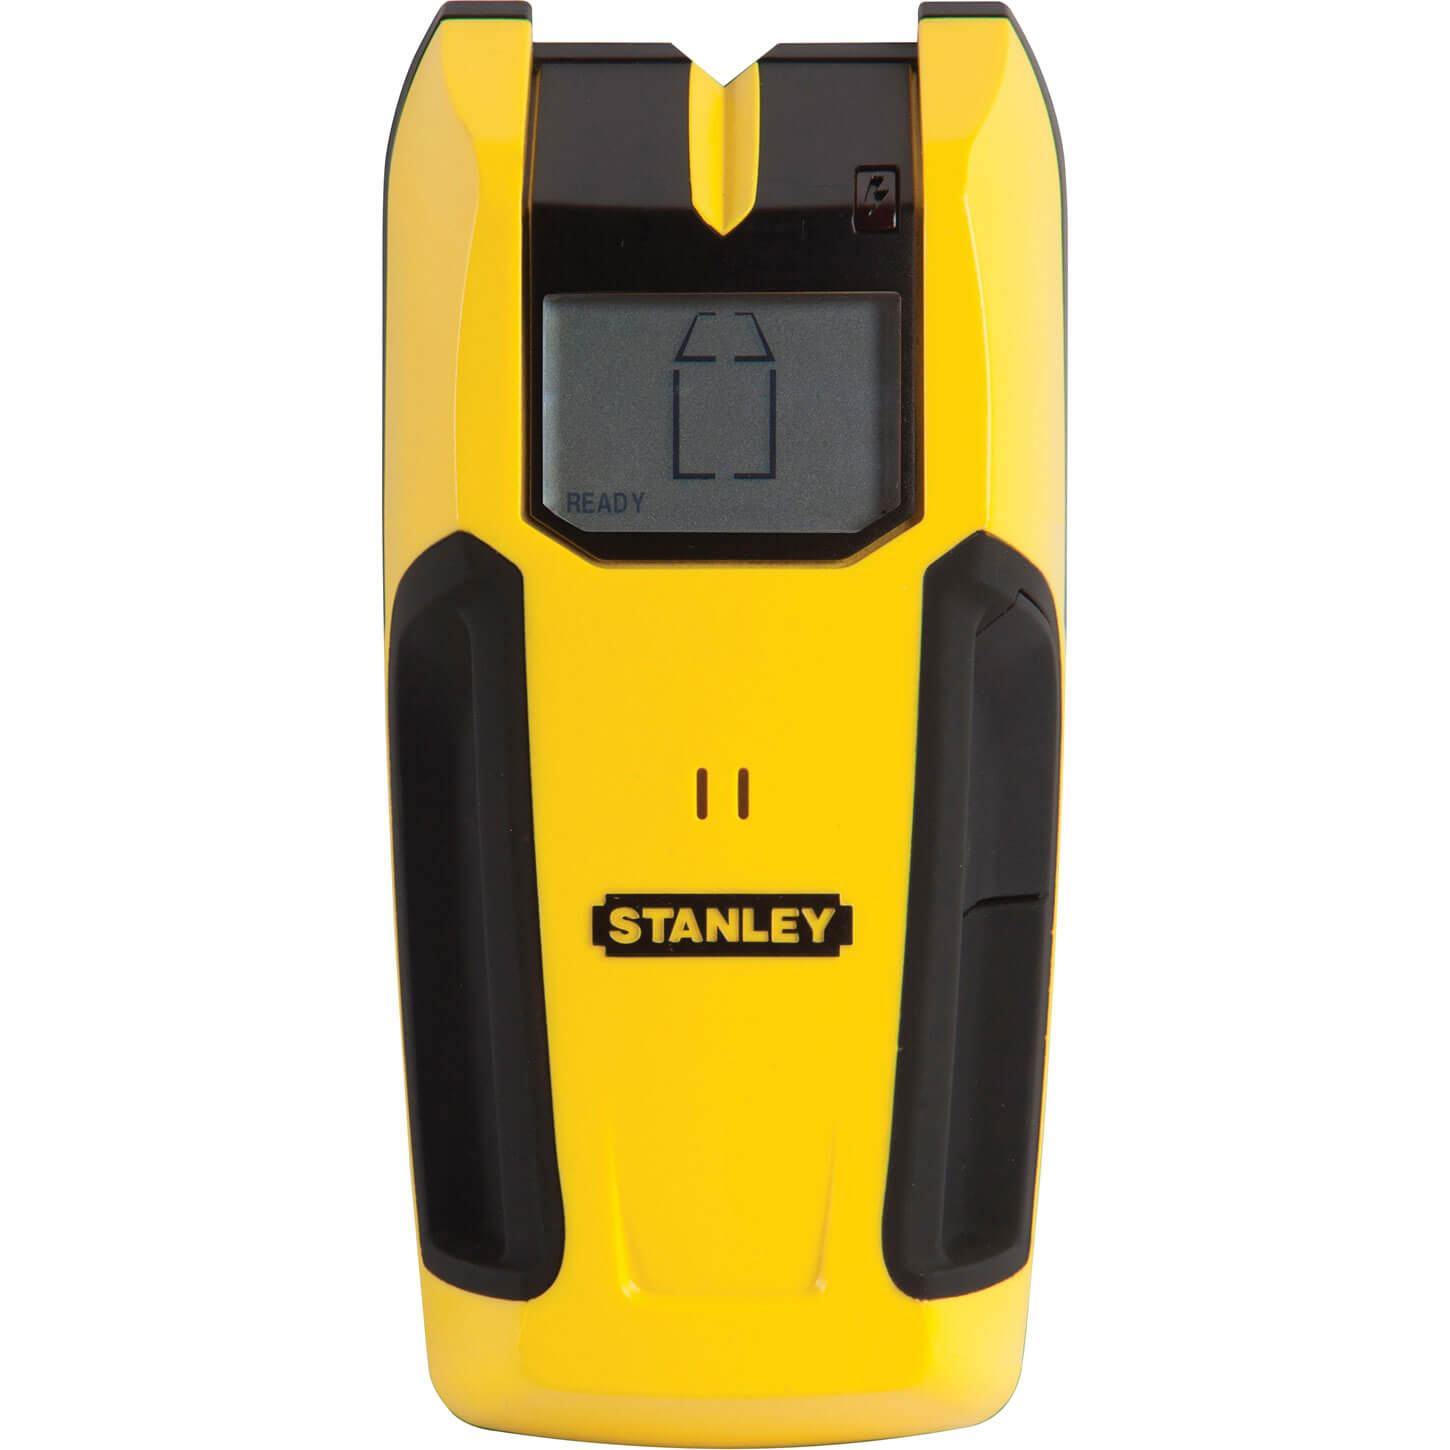 Stanley Intelli Stud Sensor 200 Wall Scanner & Detector for Cables, Metal & Wood